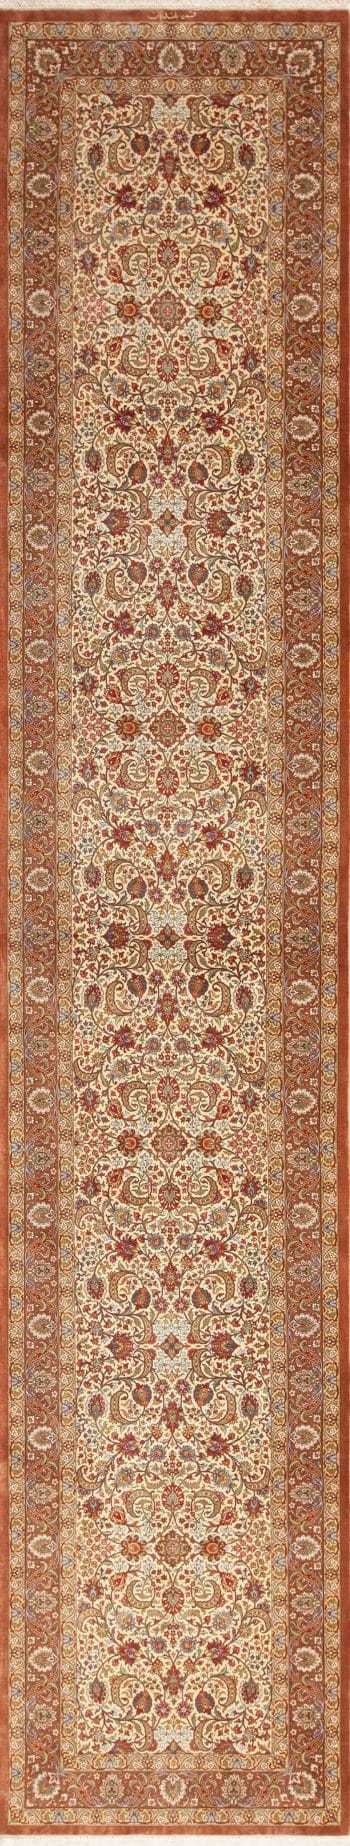 Fine Luxurious Floral Design Vintage Persian Qum Silk Hallway Runner Rug 72792 by Nazmiyal Antique Rugs